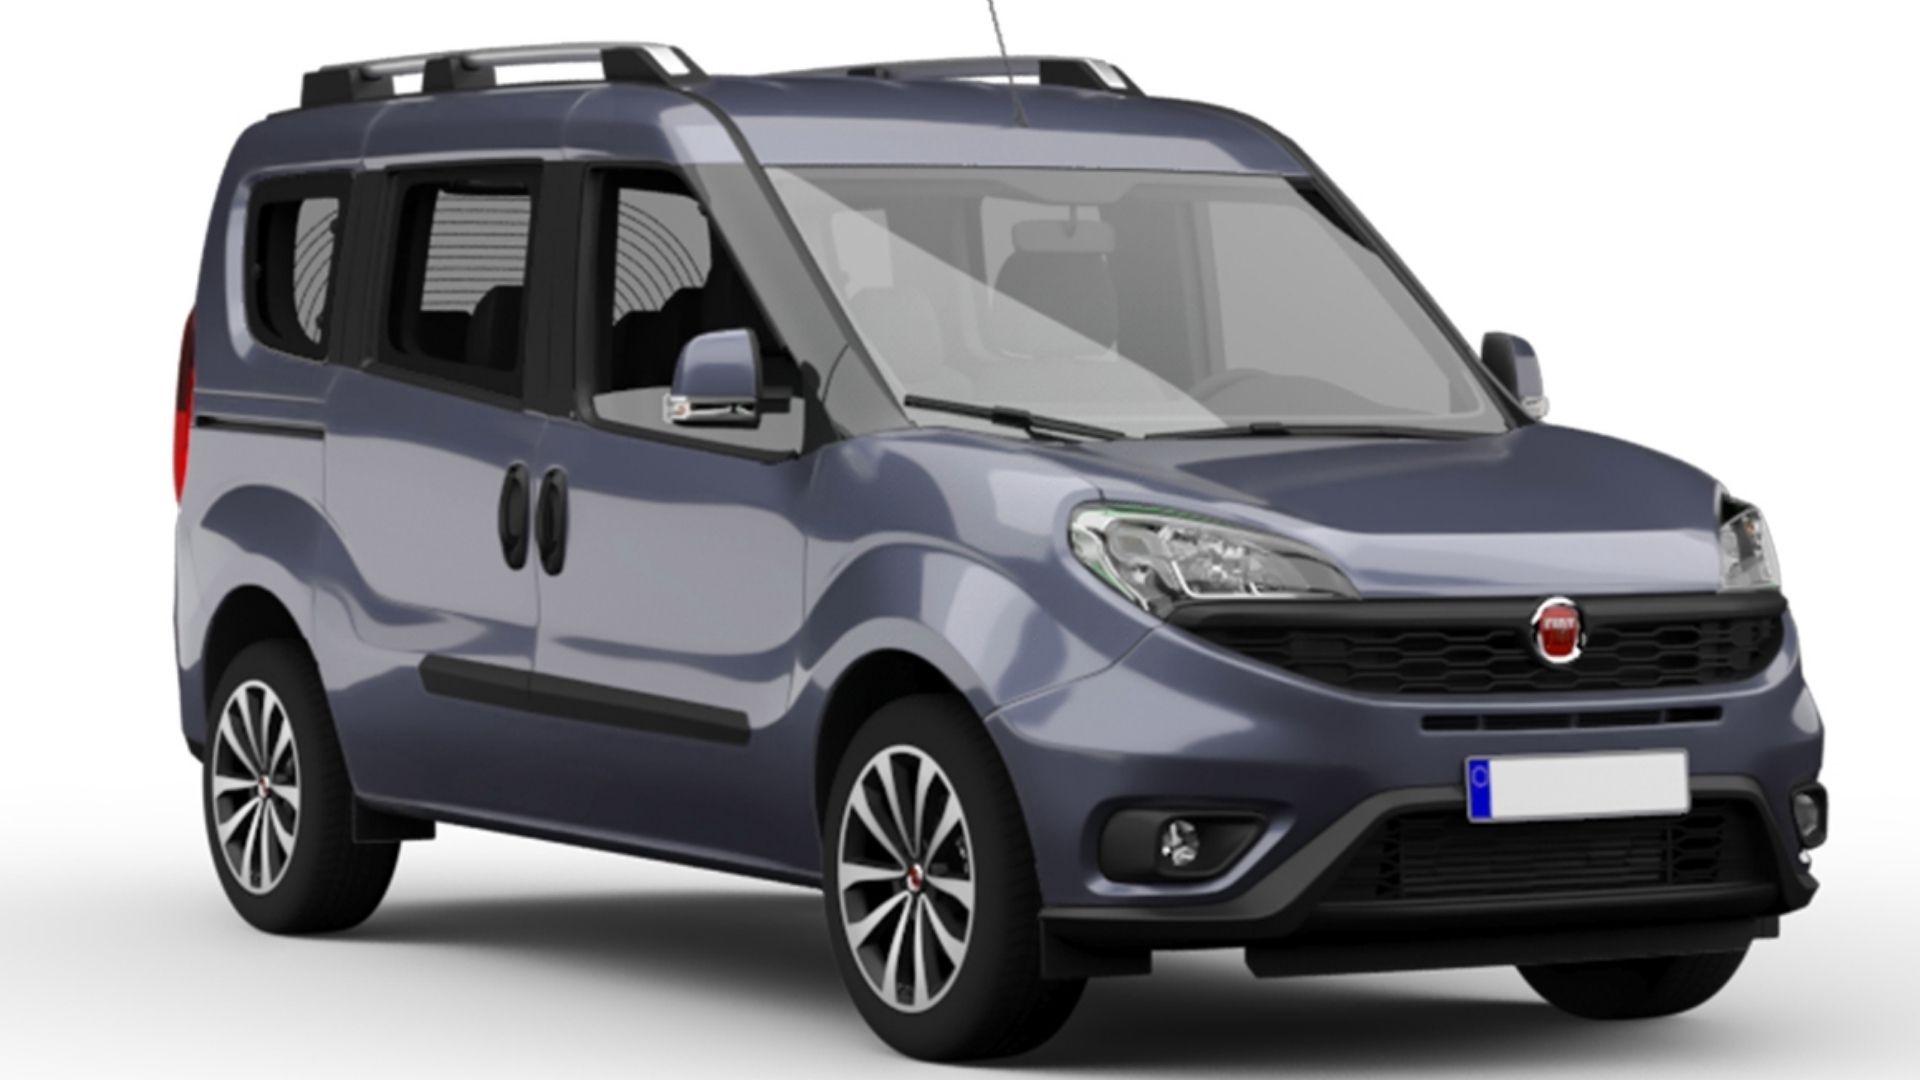 Fiat Doblo Combi 2021 prices: